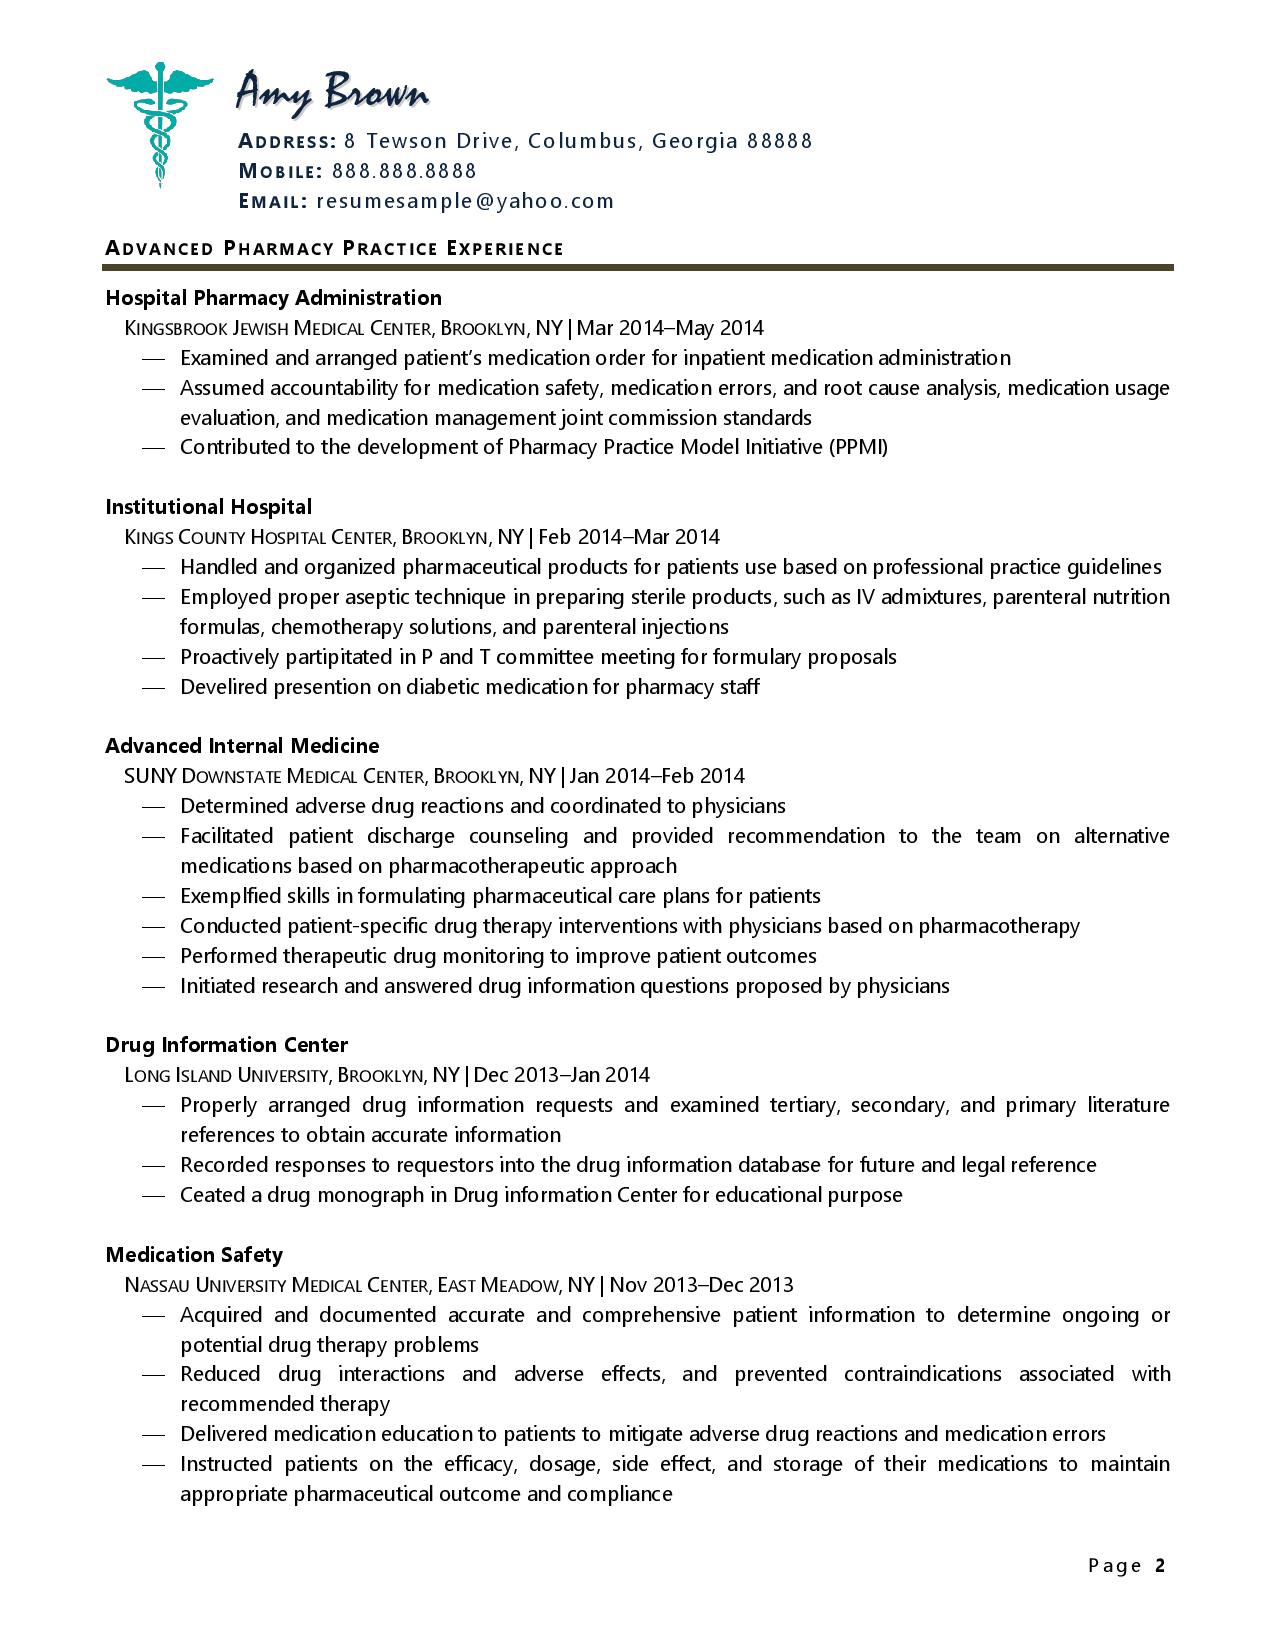 pharmacist-resume-examples-resume-professional-writers